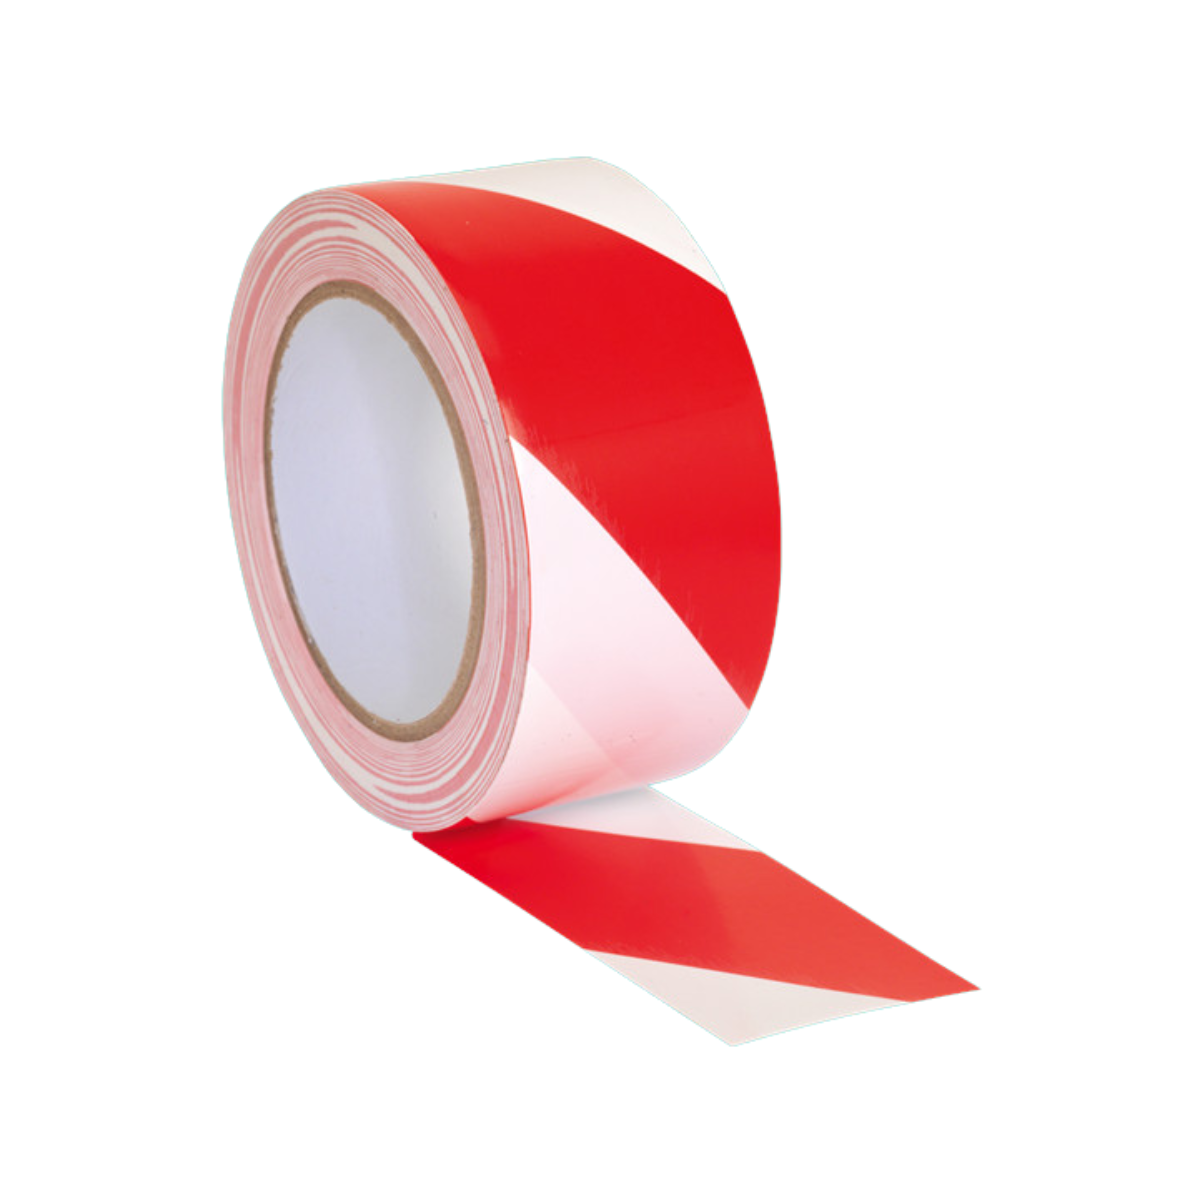 1 x Yuzet Hazard Warning Tape Self Adhesive Red/White 50mm x 33m